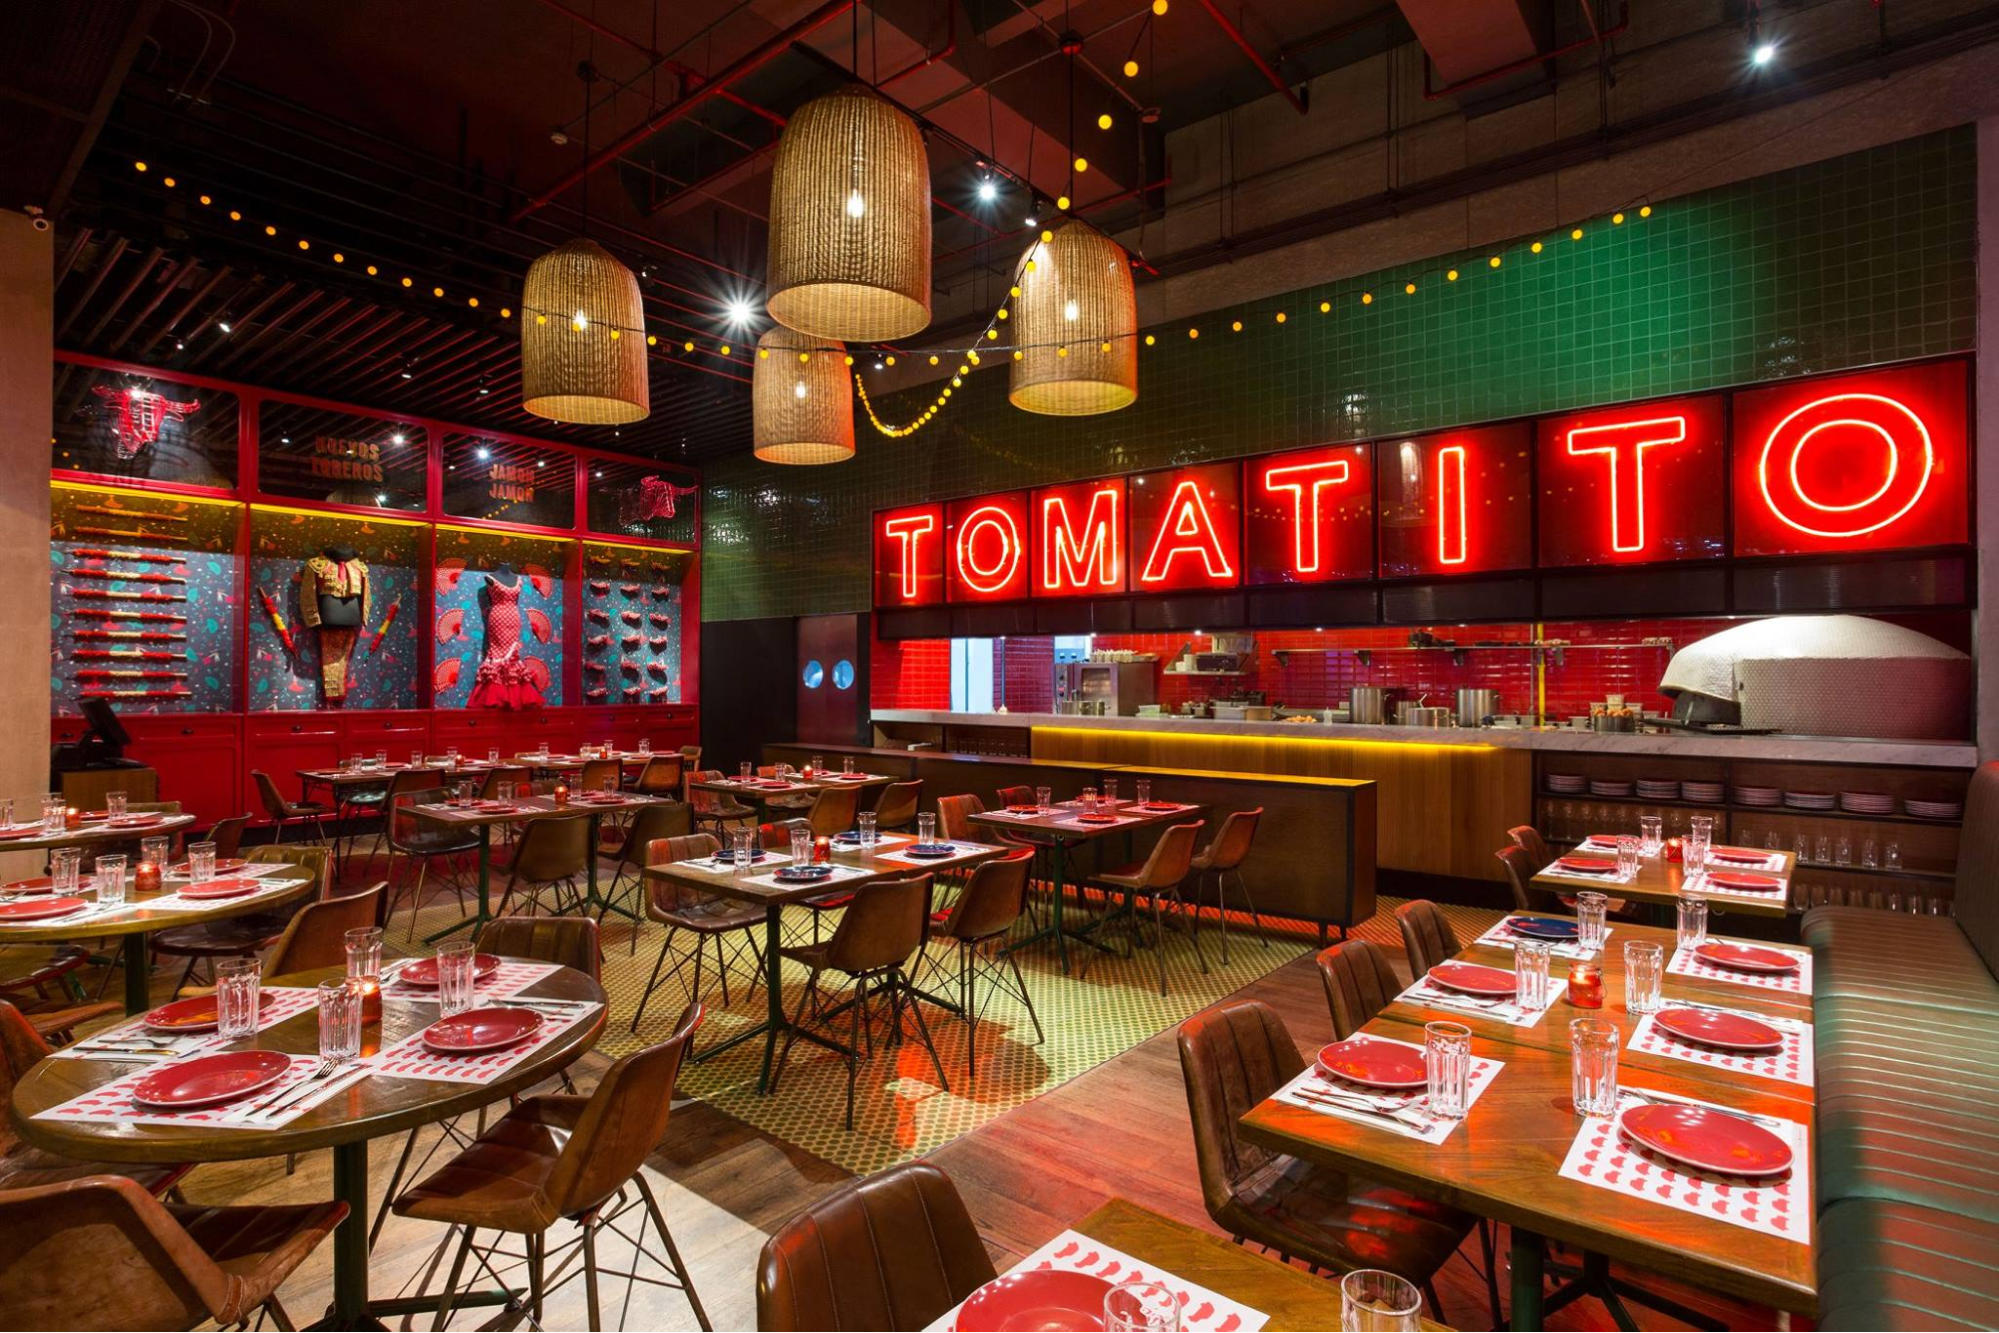 Spanish restaurants Metro Manila - Tomatito